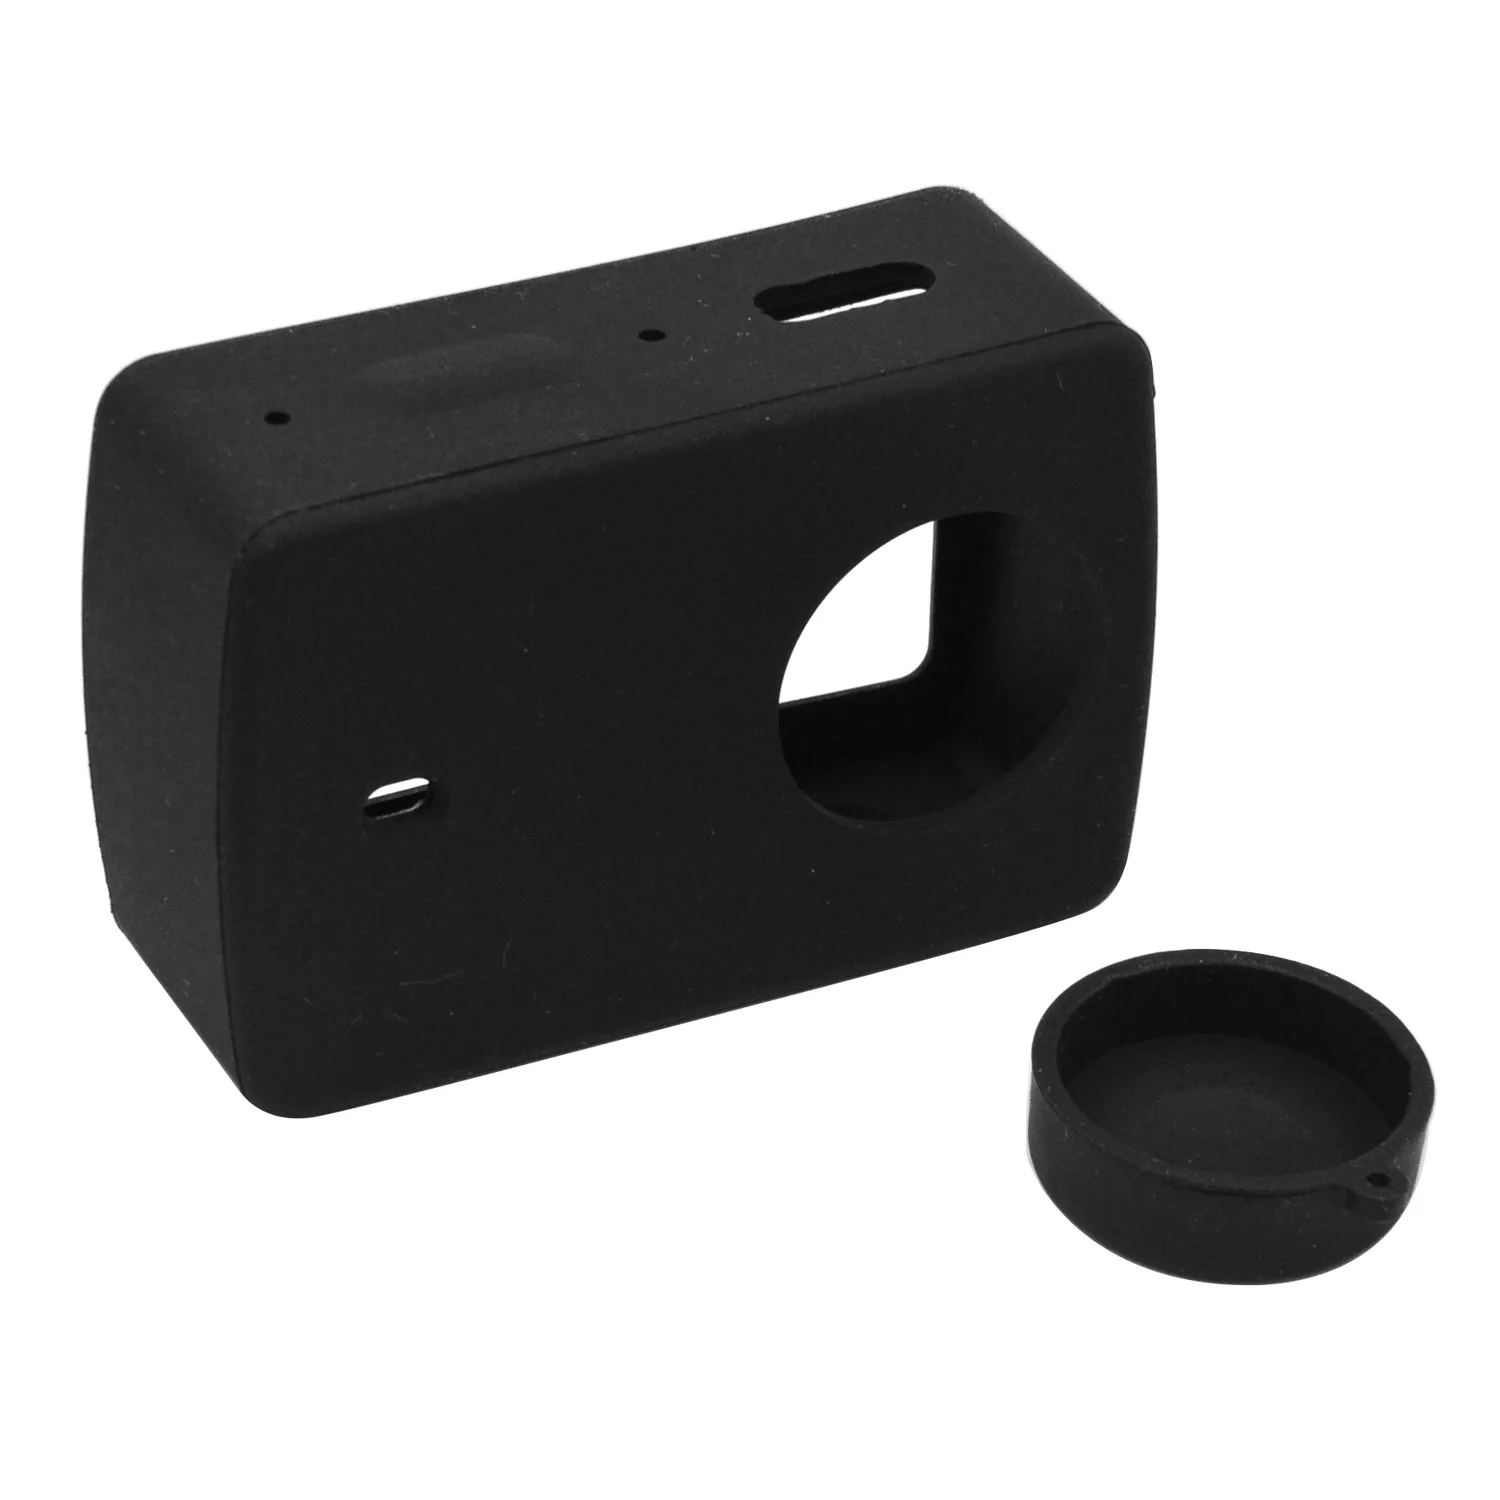 Gosear силиконовая защитная пленка оболочка крышка объектива для Xiaomi Yi 4 K XiaoYi 2 II Xiomi 4 K гаджеты для экшн-камеры - Цвет: Black